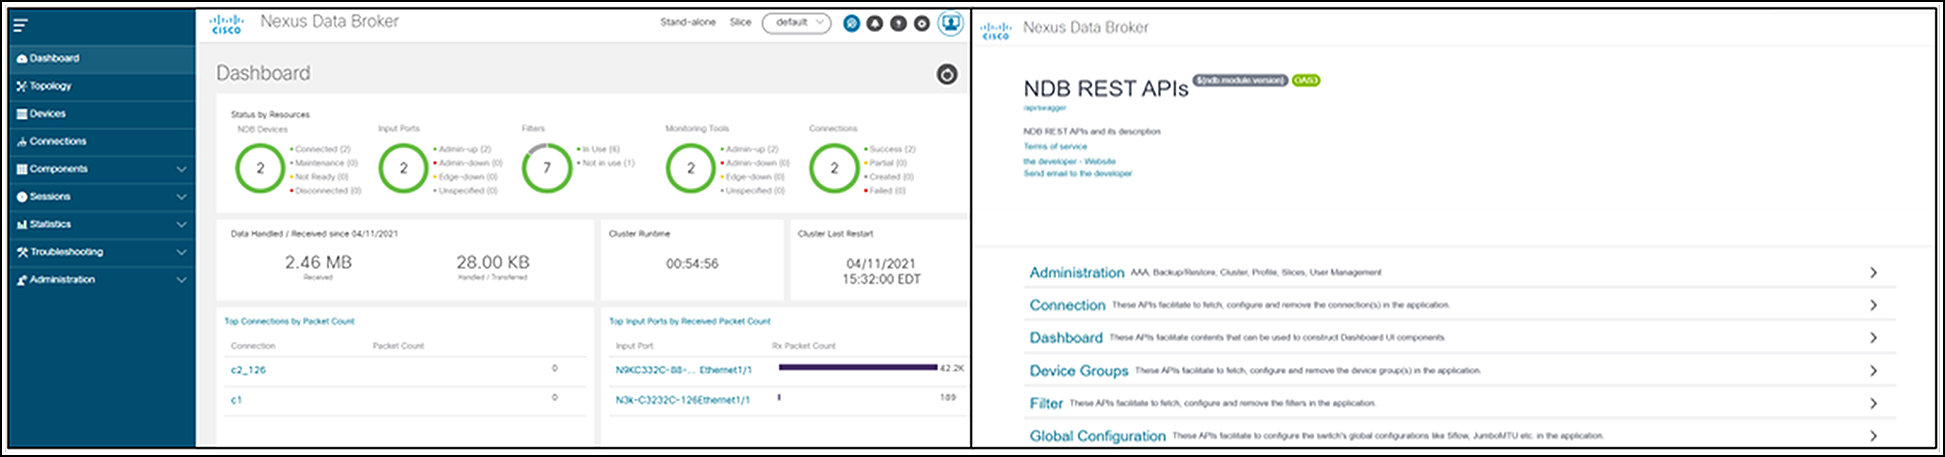 Nexus Dashboard Data Broker (NDDB) web-based GUI and northbound REST APIs